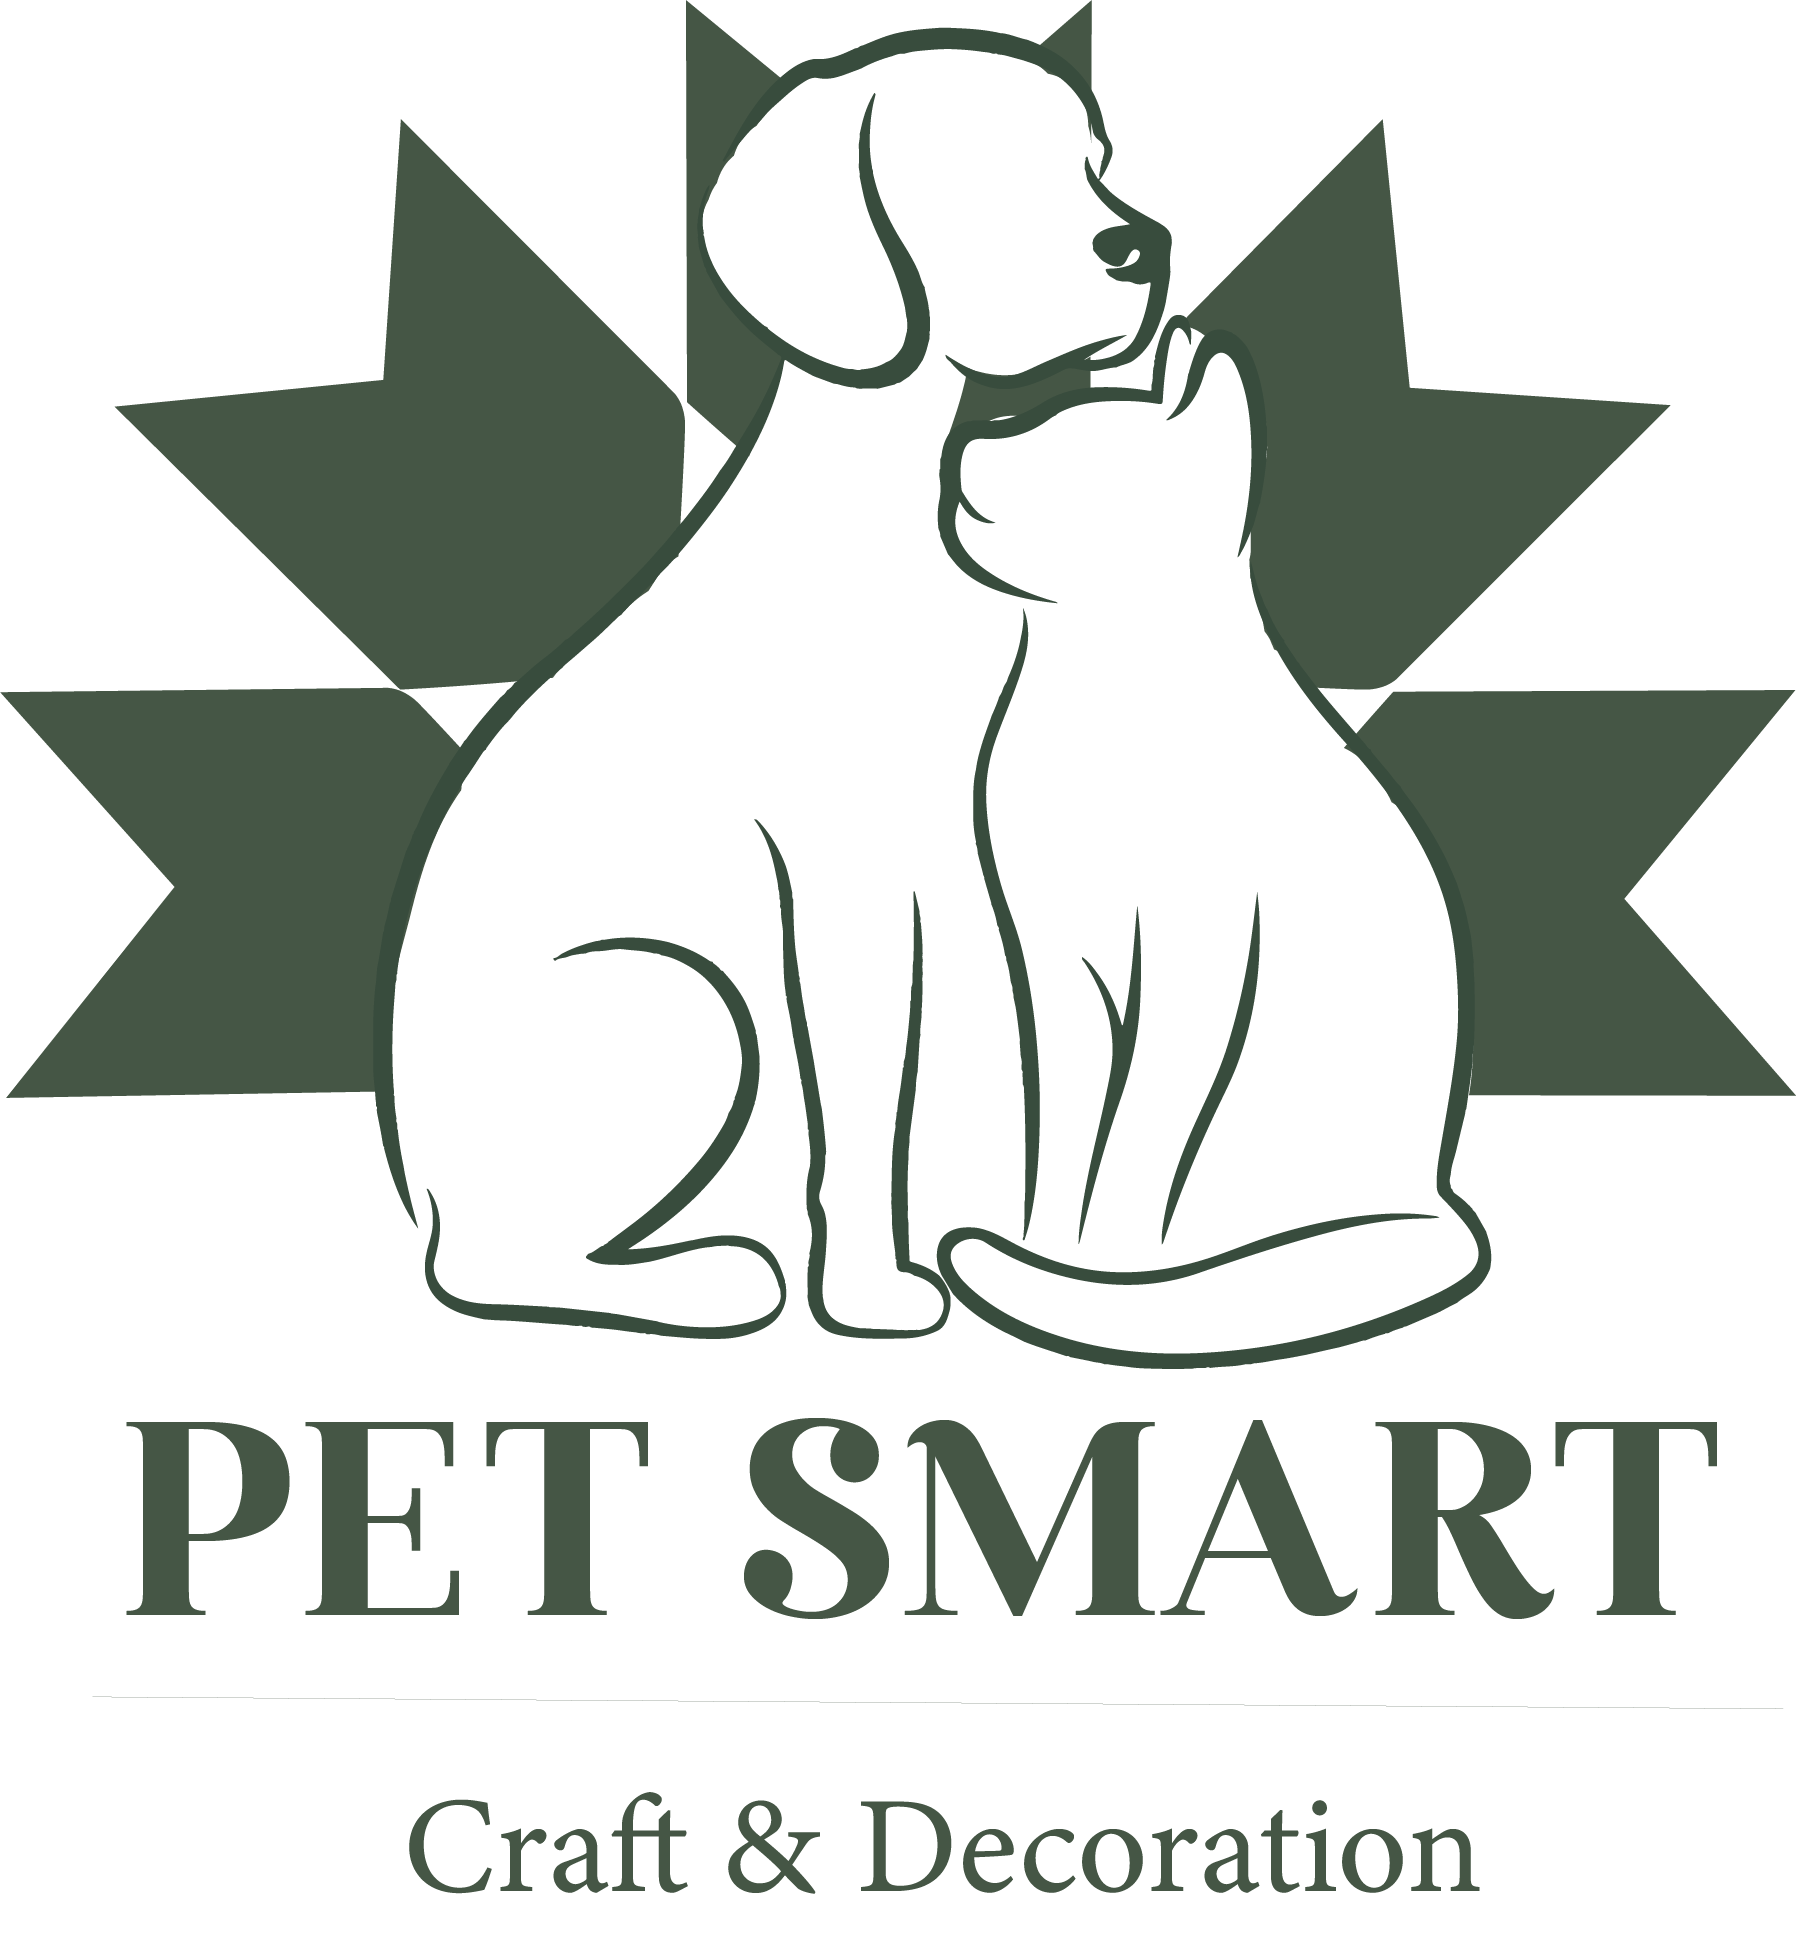 Petsmart craft and decoration